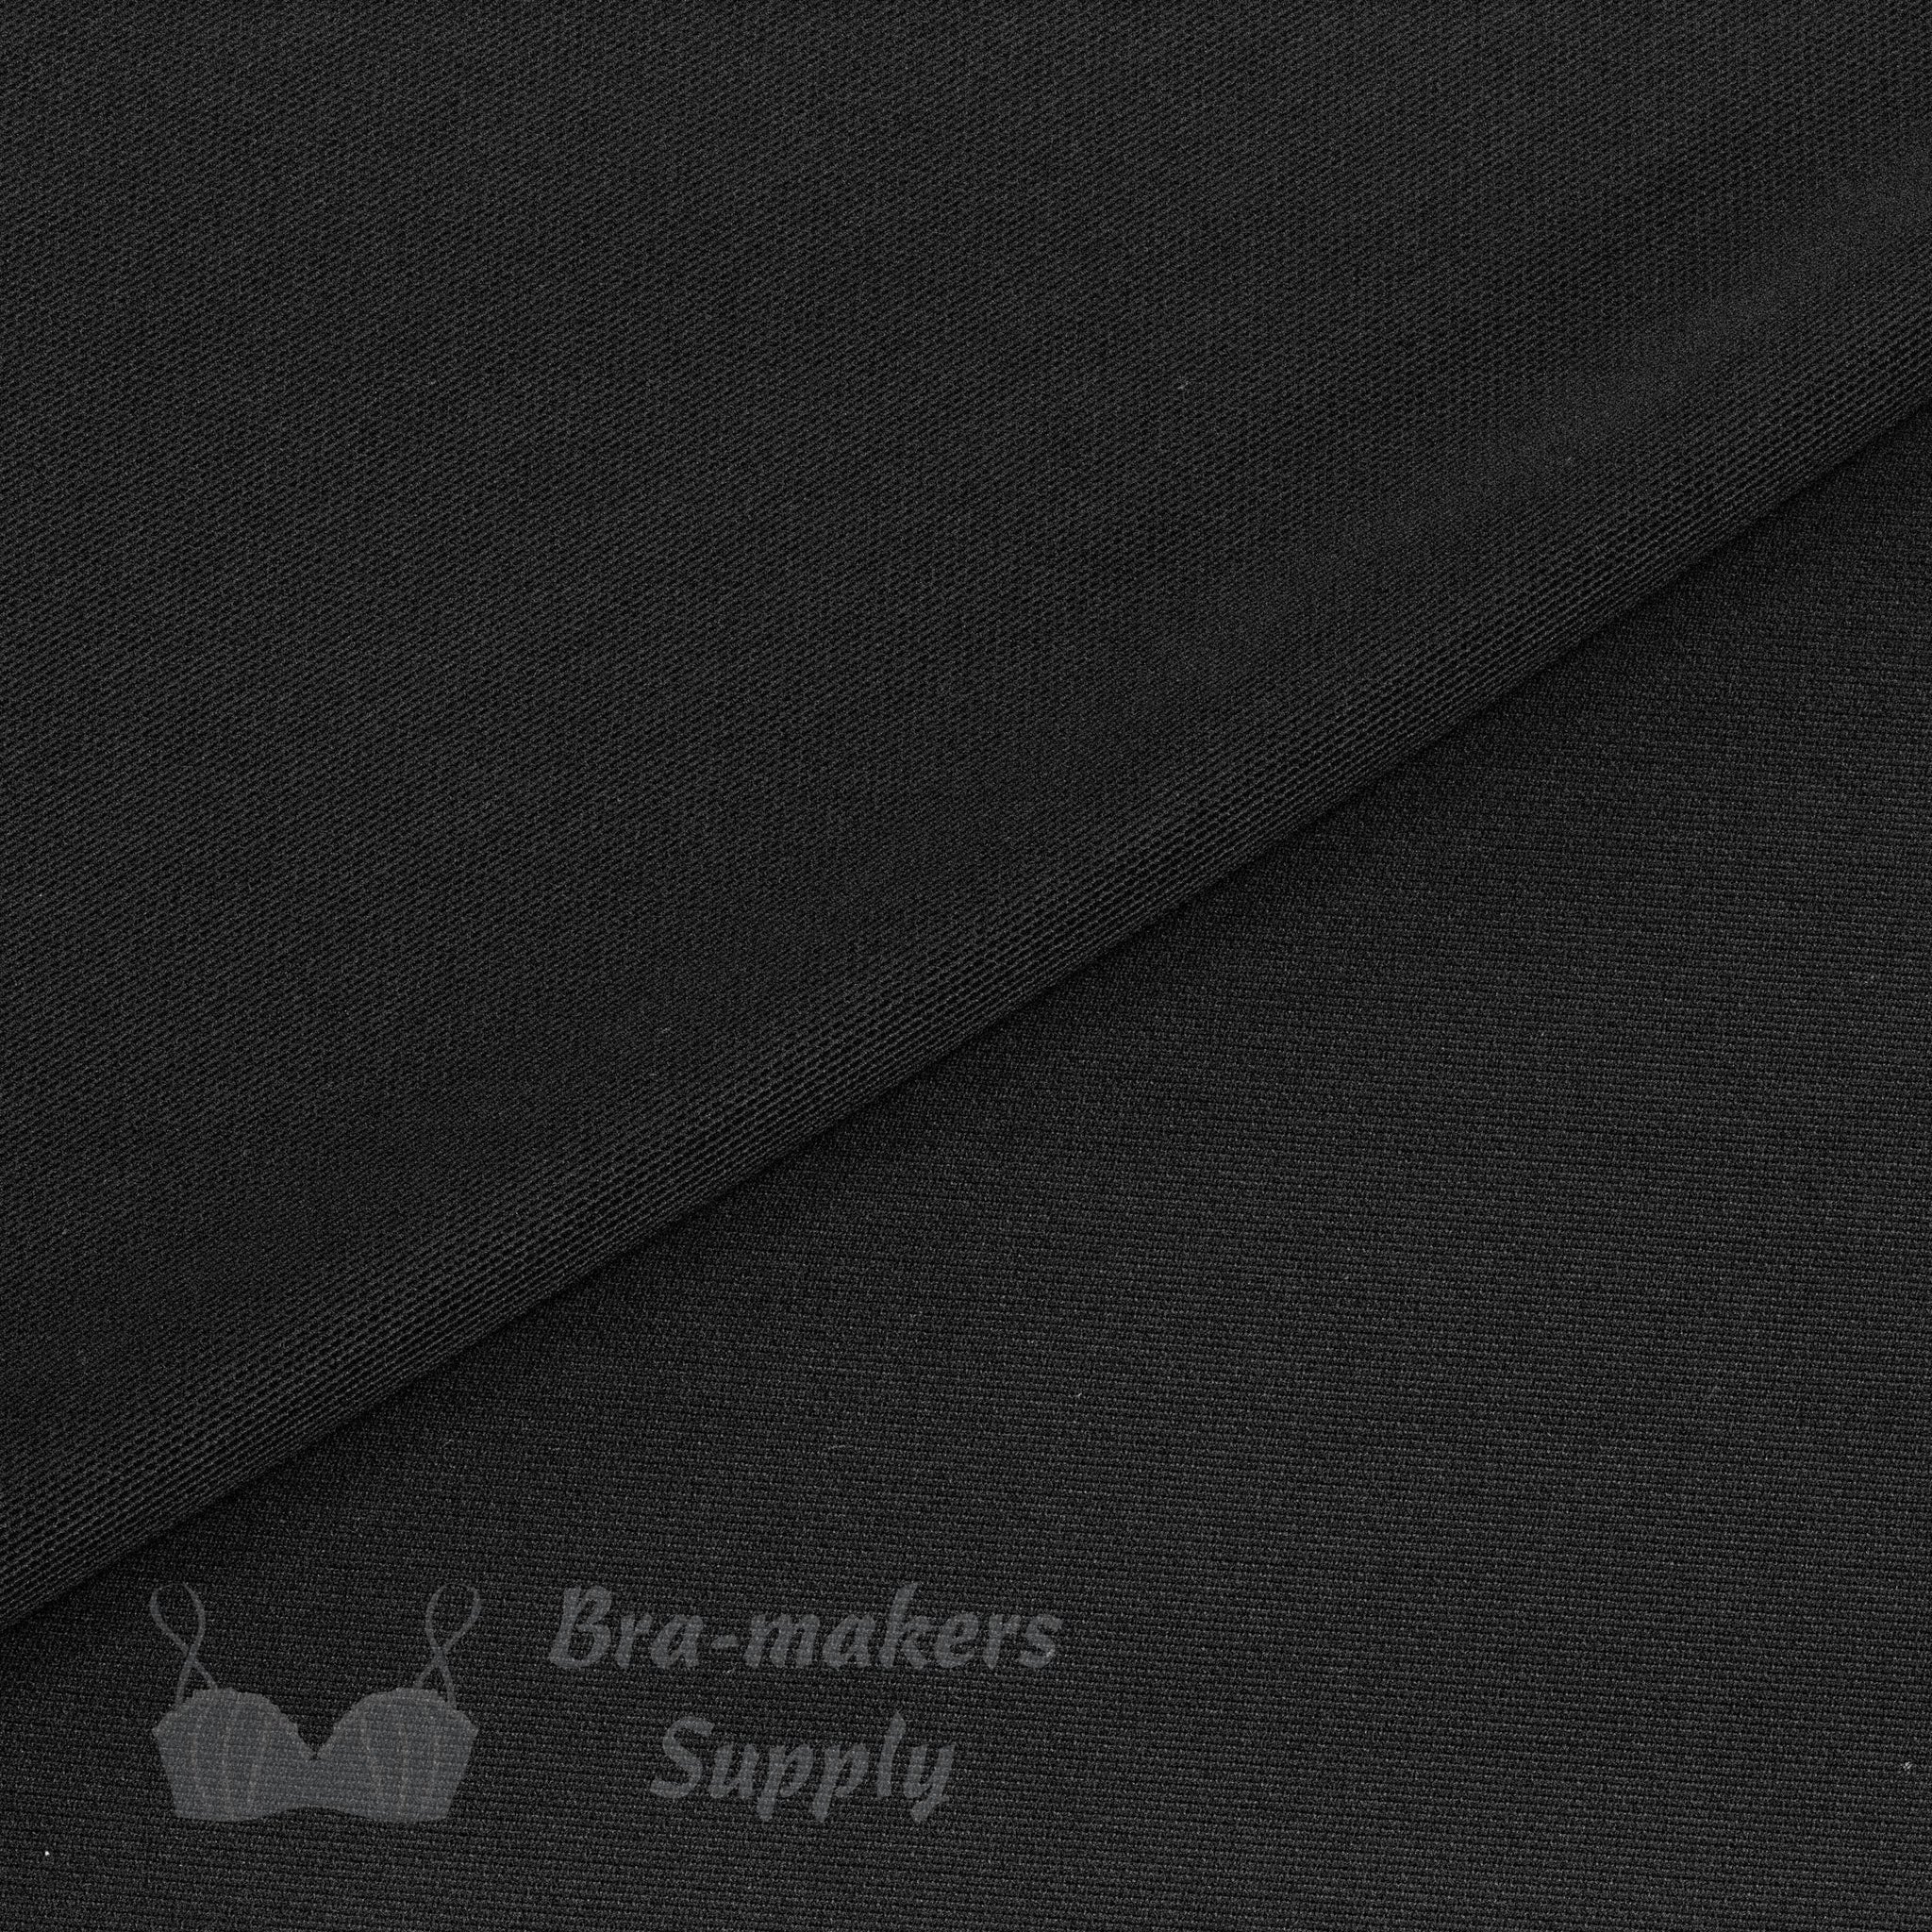 Power Mesh/Net Fabric 4way stretch Net Width 170CM Mesh for Lingerie Bra  Shapewear making sewing Costume